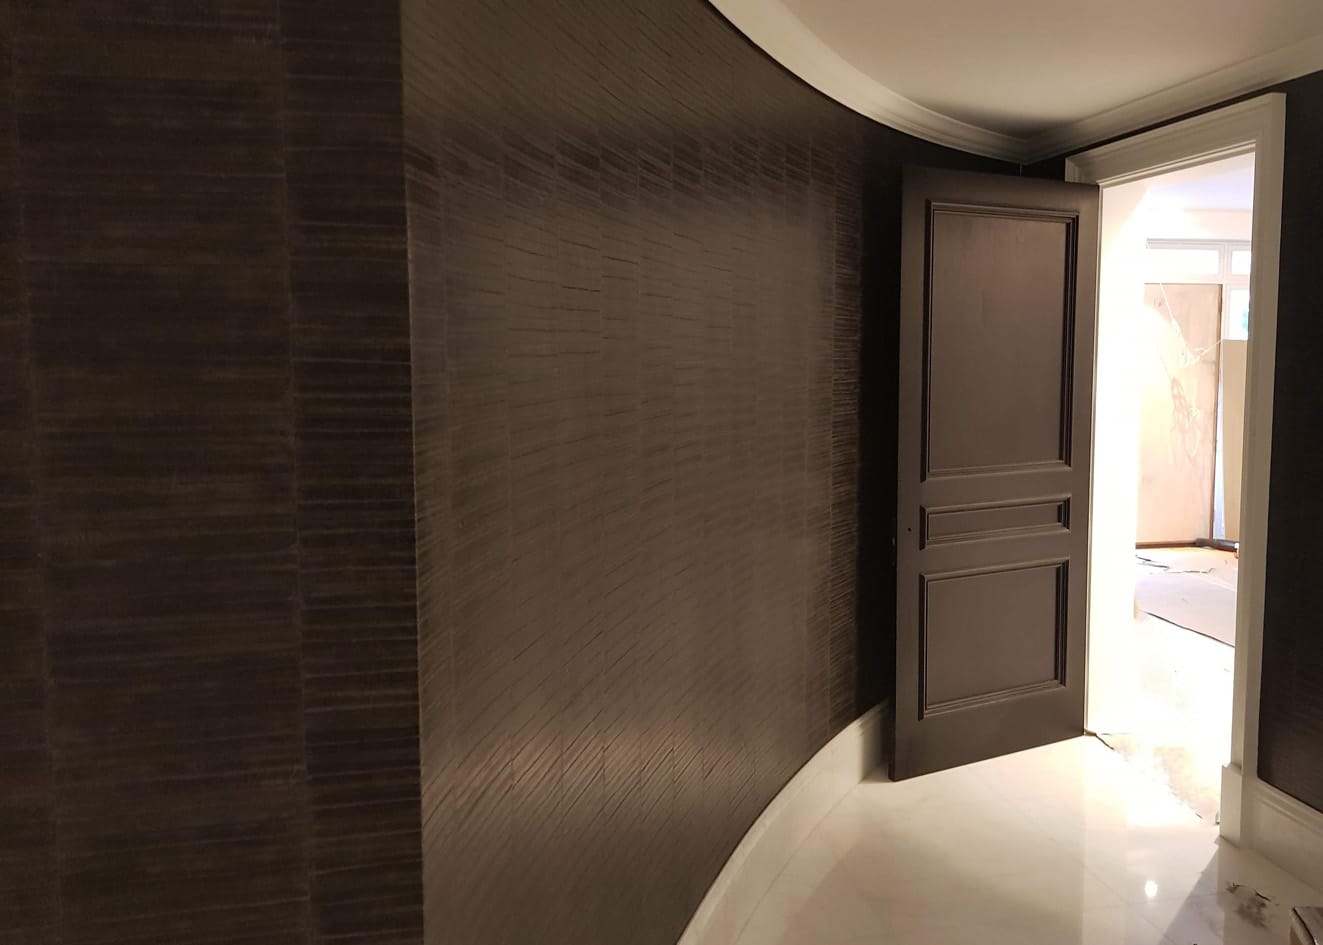 Elitis Eel Skin wallpaper installed by Bluespec Decorating wallpaper specialists in a hallway.